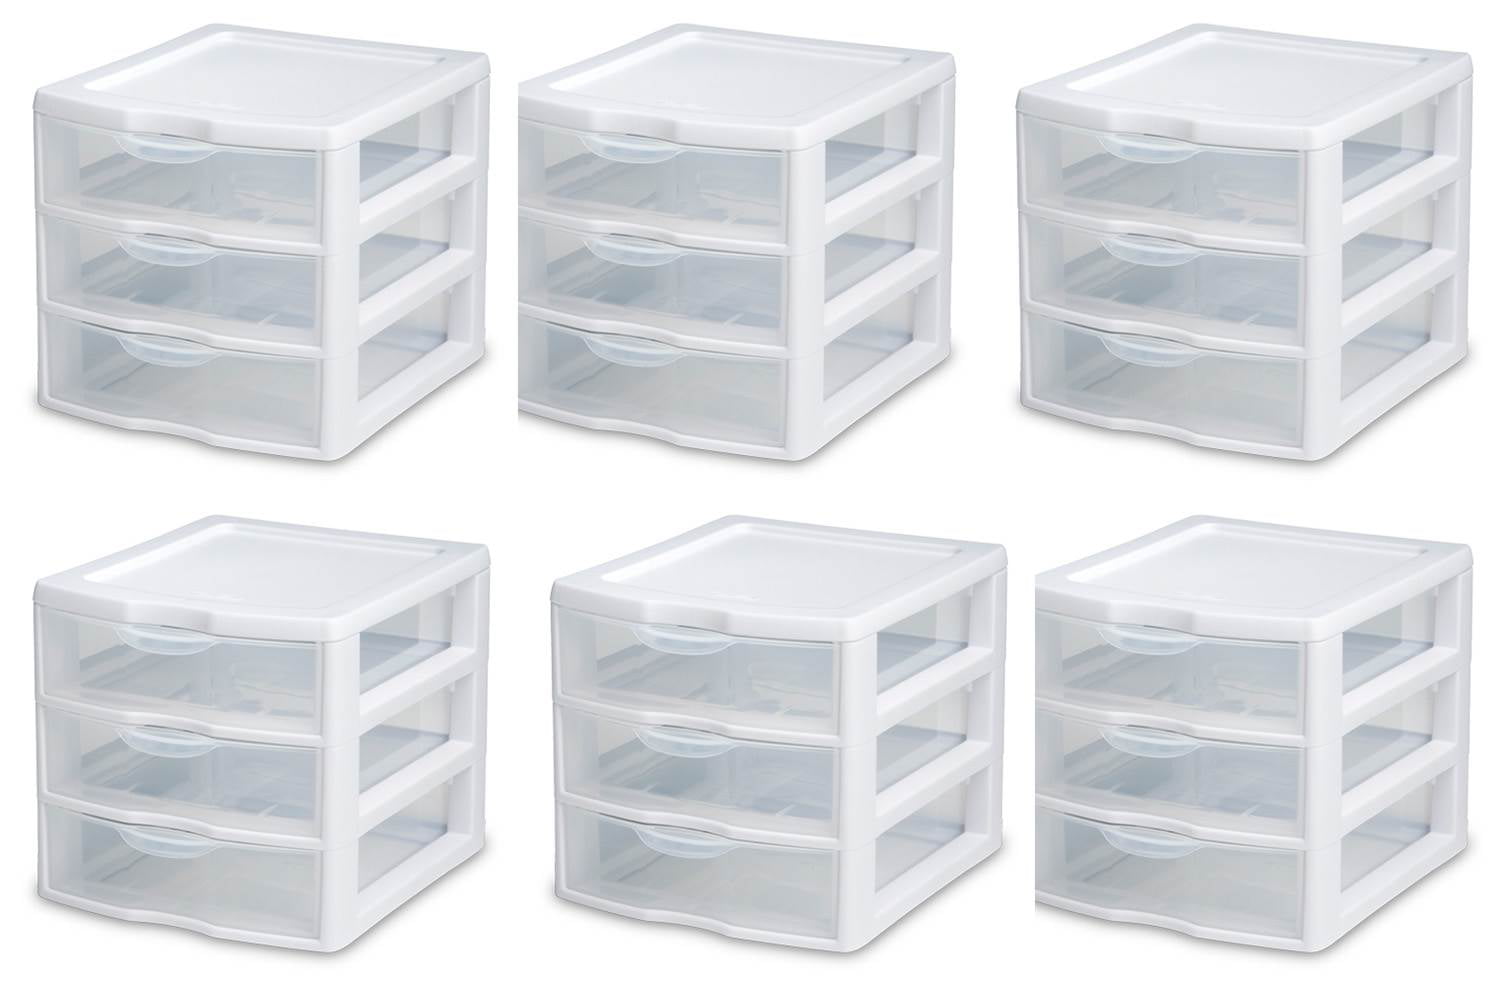 Details about   Mini Desktop Clear Plastic Storage Case 2 3 4 5 Tier Drawer Small Storage Box YY 